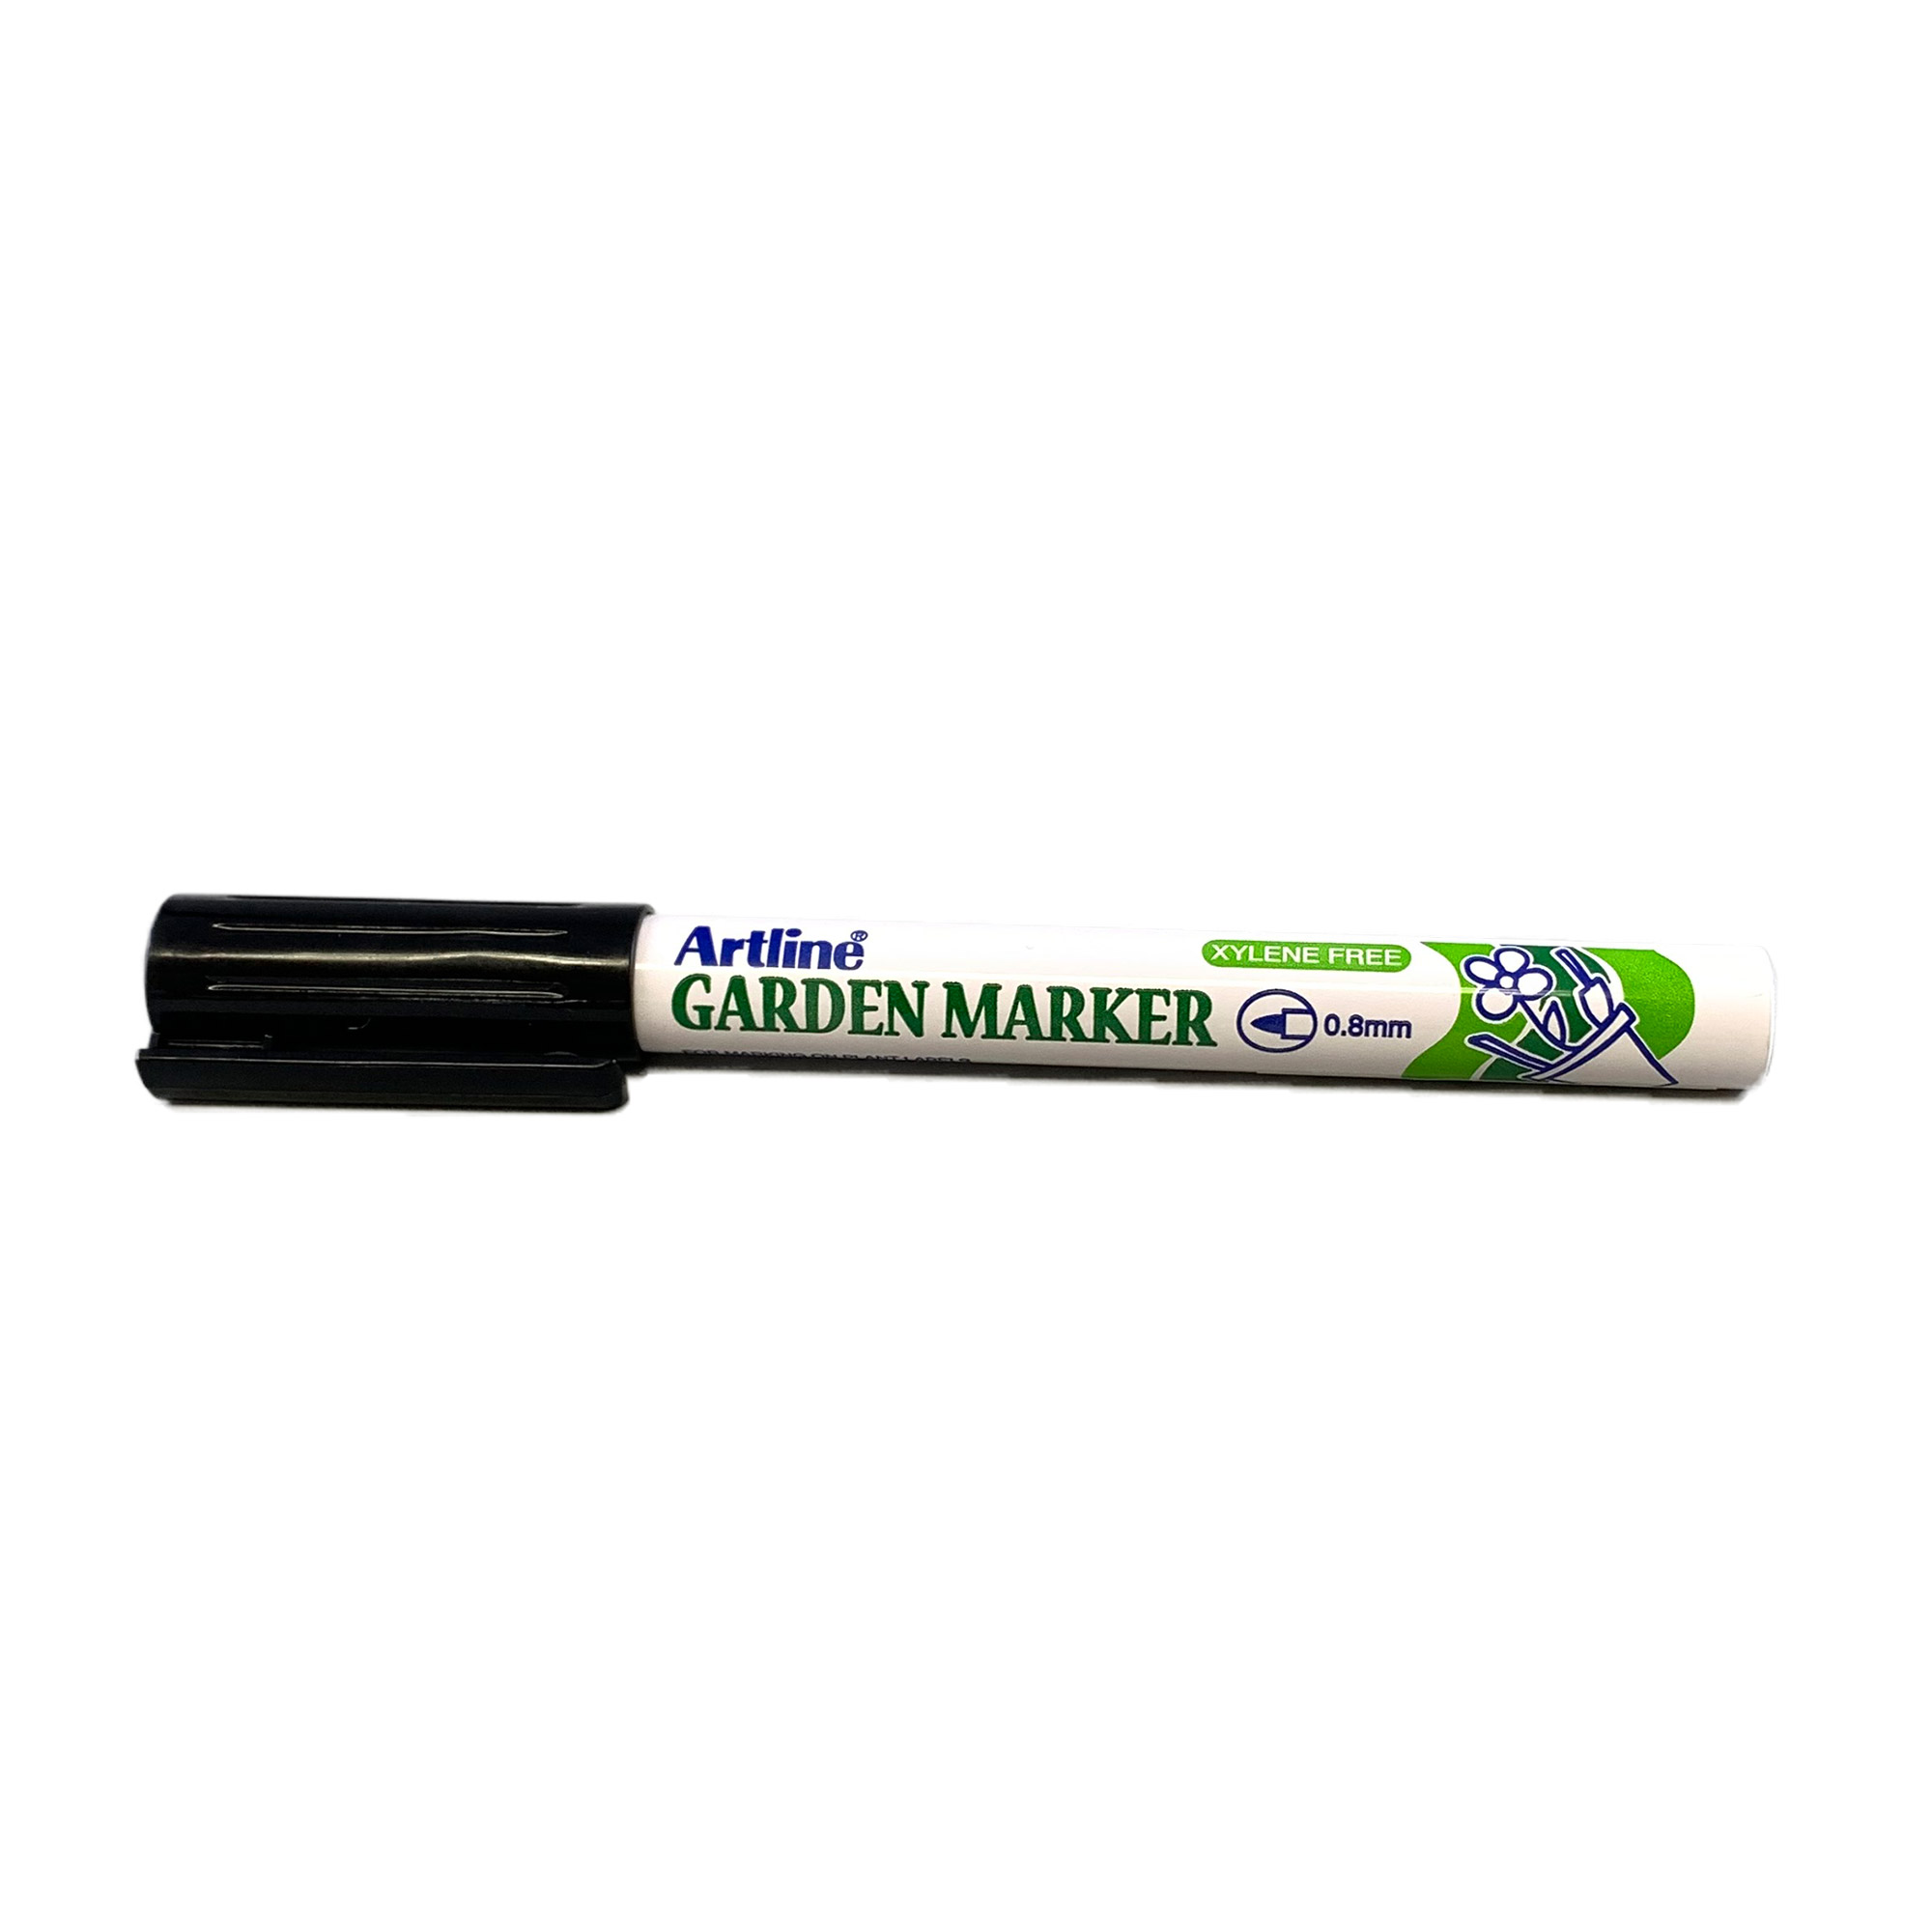 Garden Marker 1 each,Fade & water resistant Permanent Ink Black Label Marker Pen 